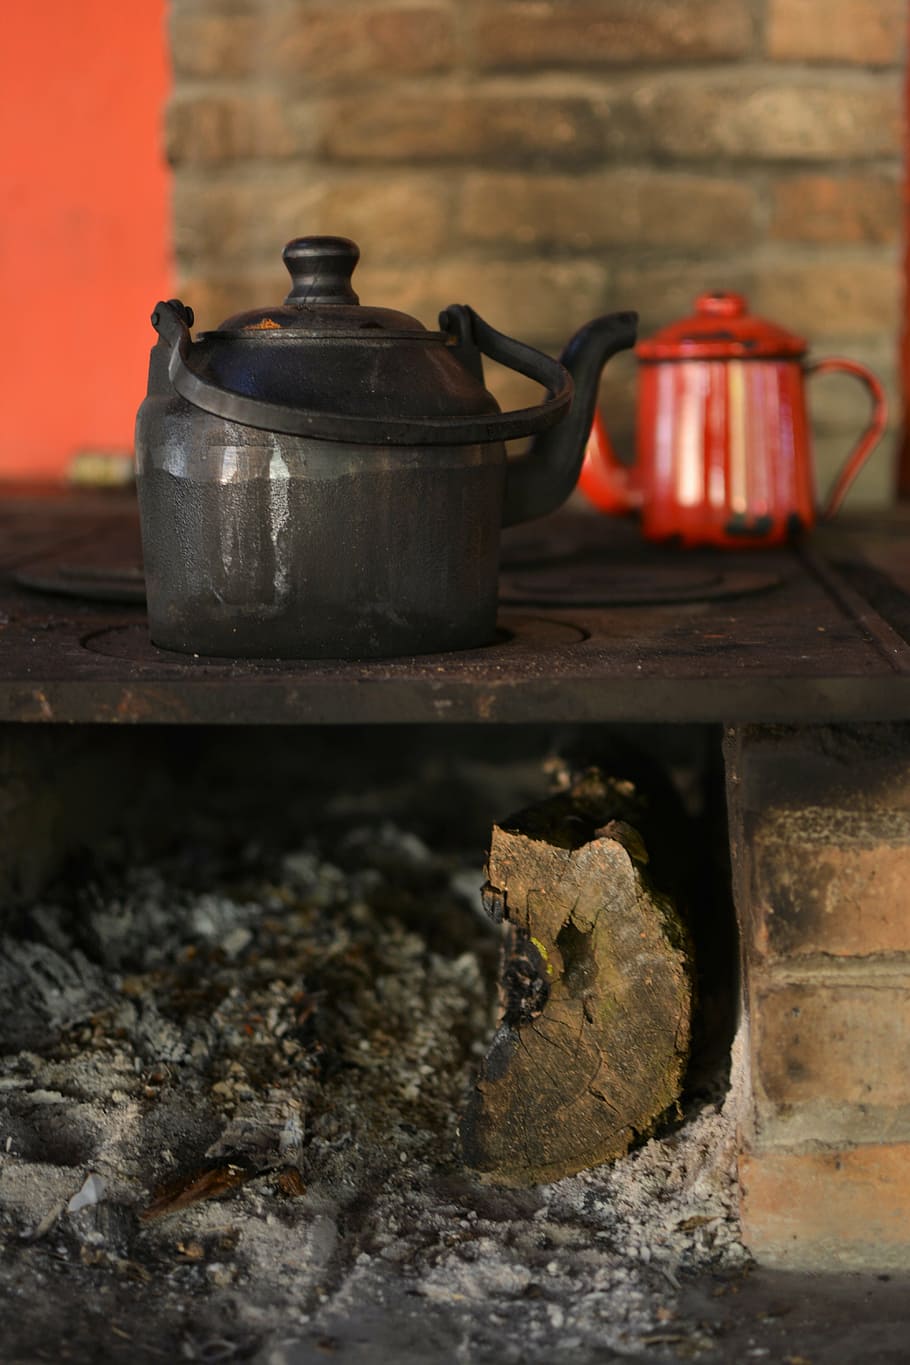 wood burning stove, firewood, fire, coal, kettle, coffee, milk, pan, farm, roça